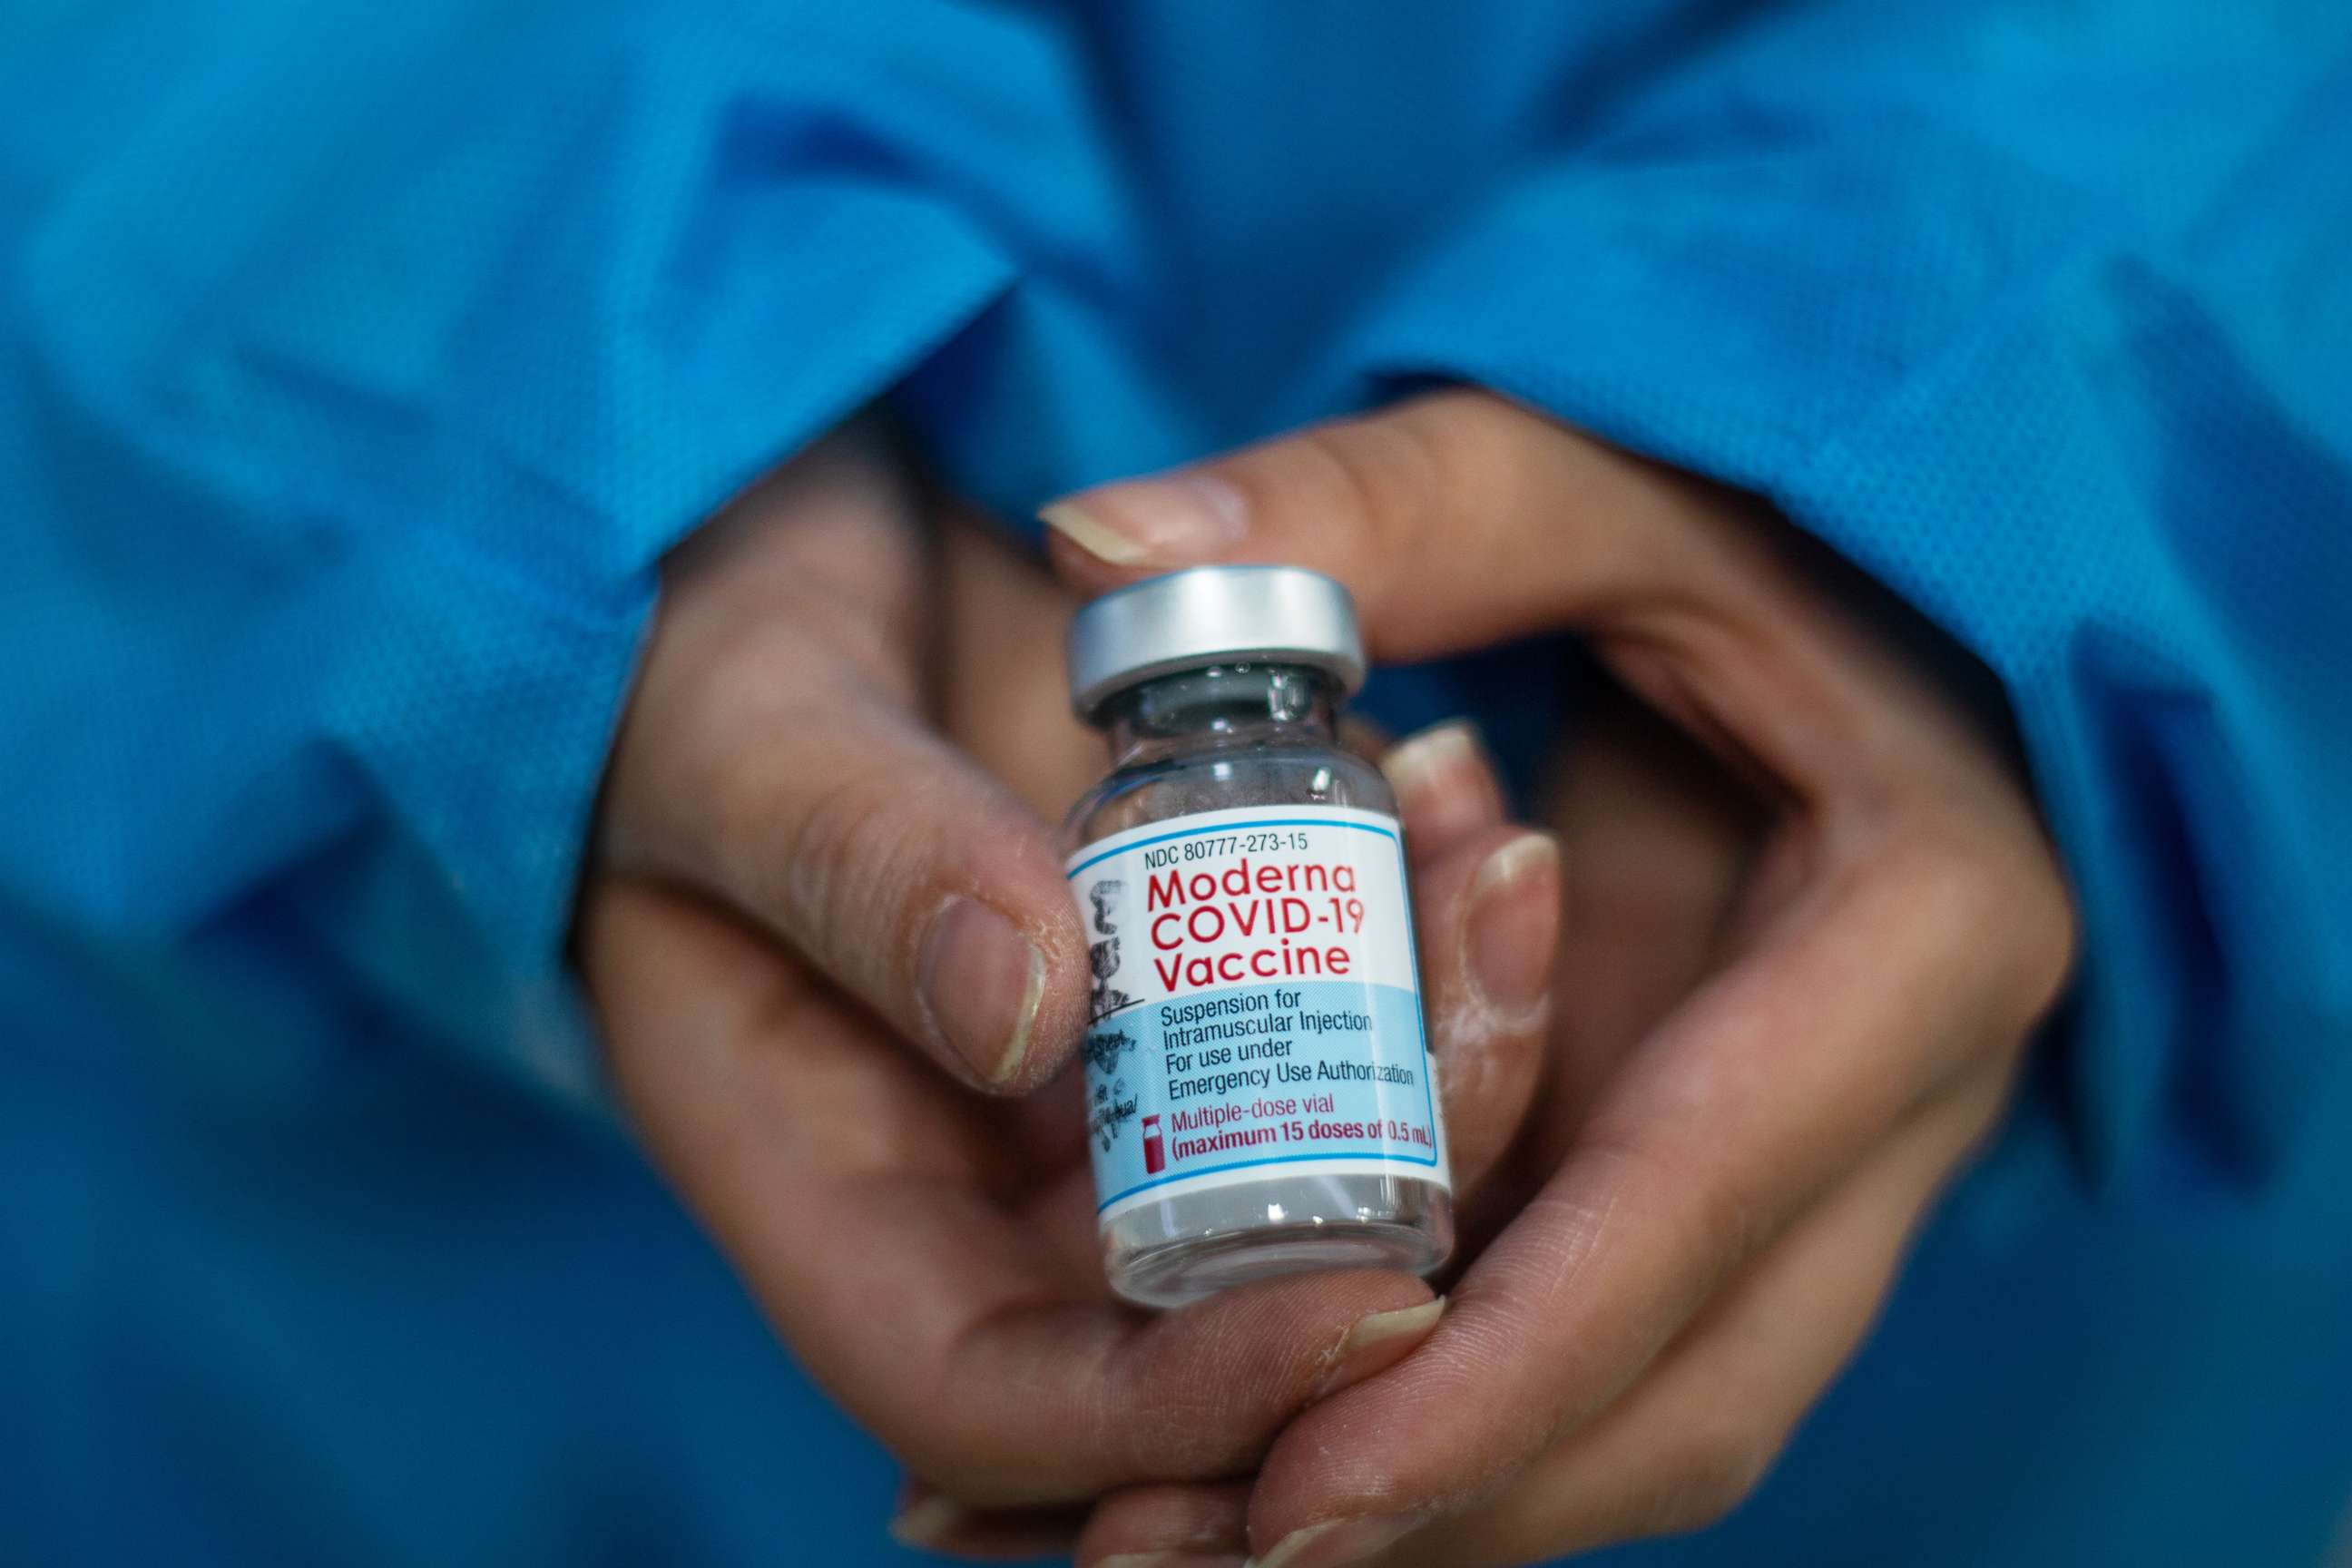 PHOTO: A nurse shows a vial of the Moderna Covid-19 vaccine.